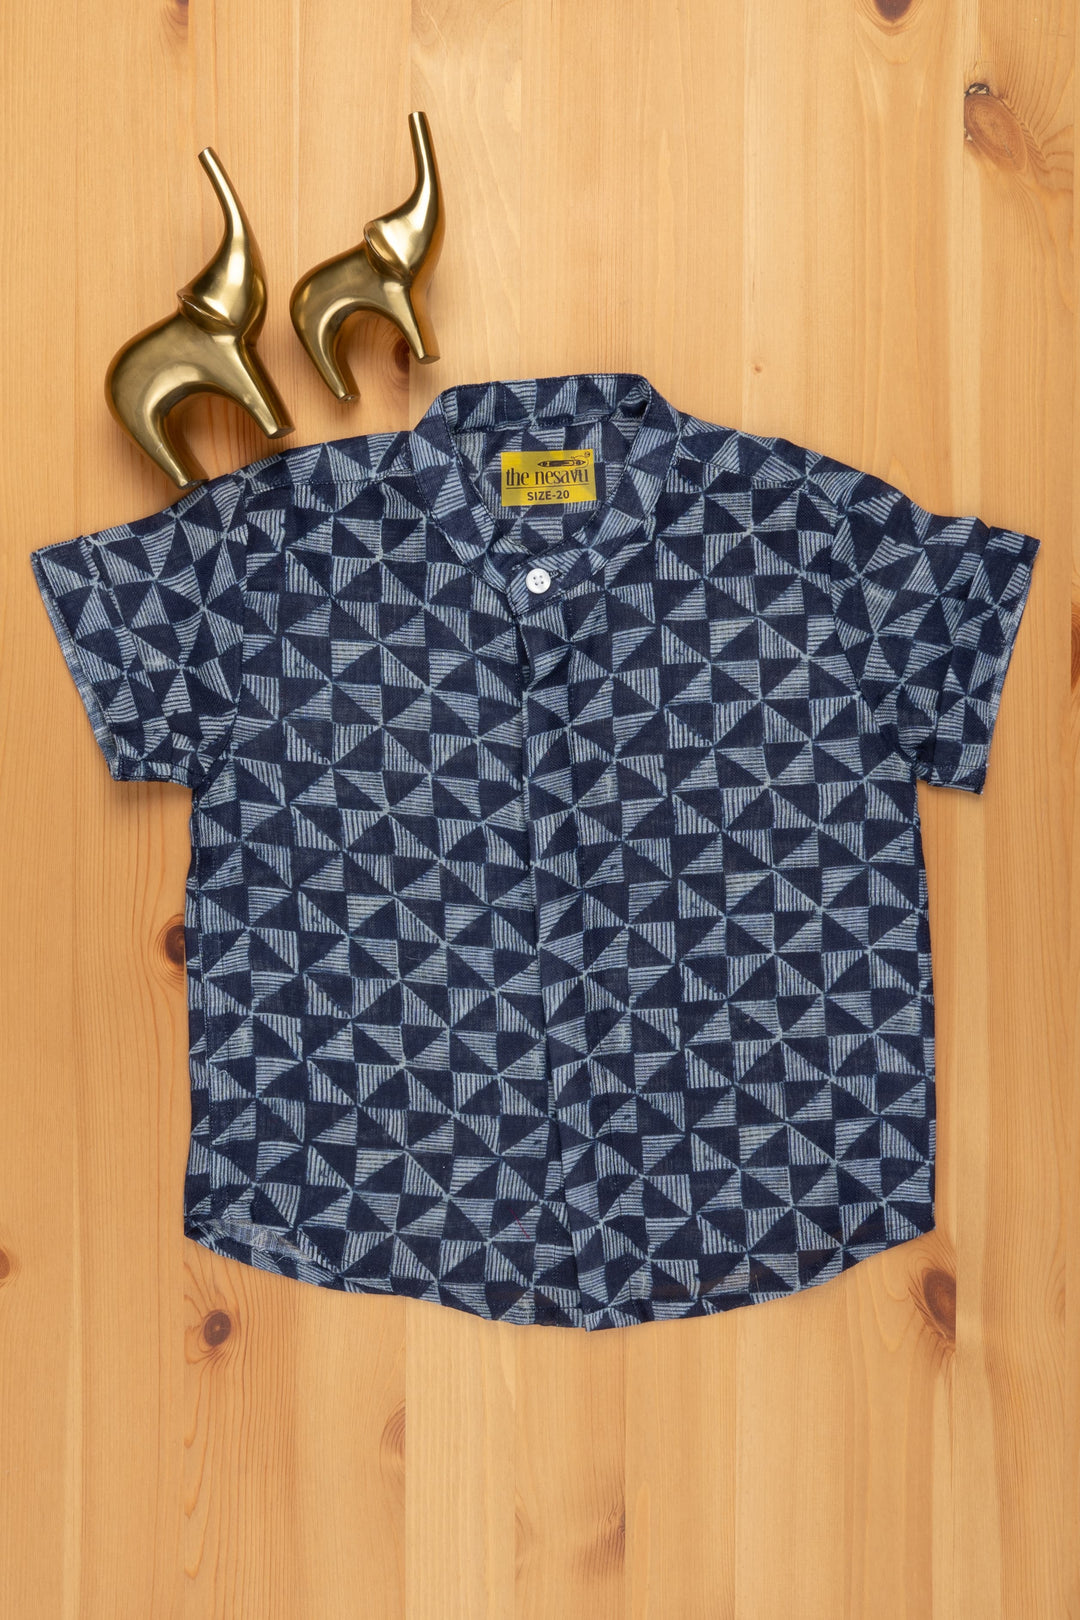 The Nesavu Boys Linen Shirt Indigo Serenity: Linen Boys' Shirt with Tranquil Blue Prints for a Calming Look Nesavu 14 (6M) / Blue / Linen BS052 Tranquil Blue Printed Shirt | Baby Shirt Online | The Nesavu